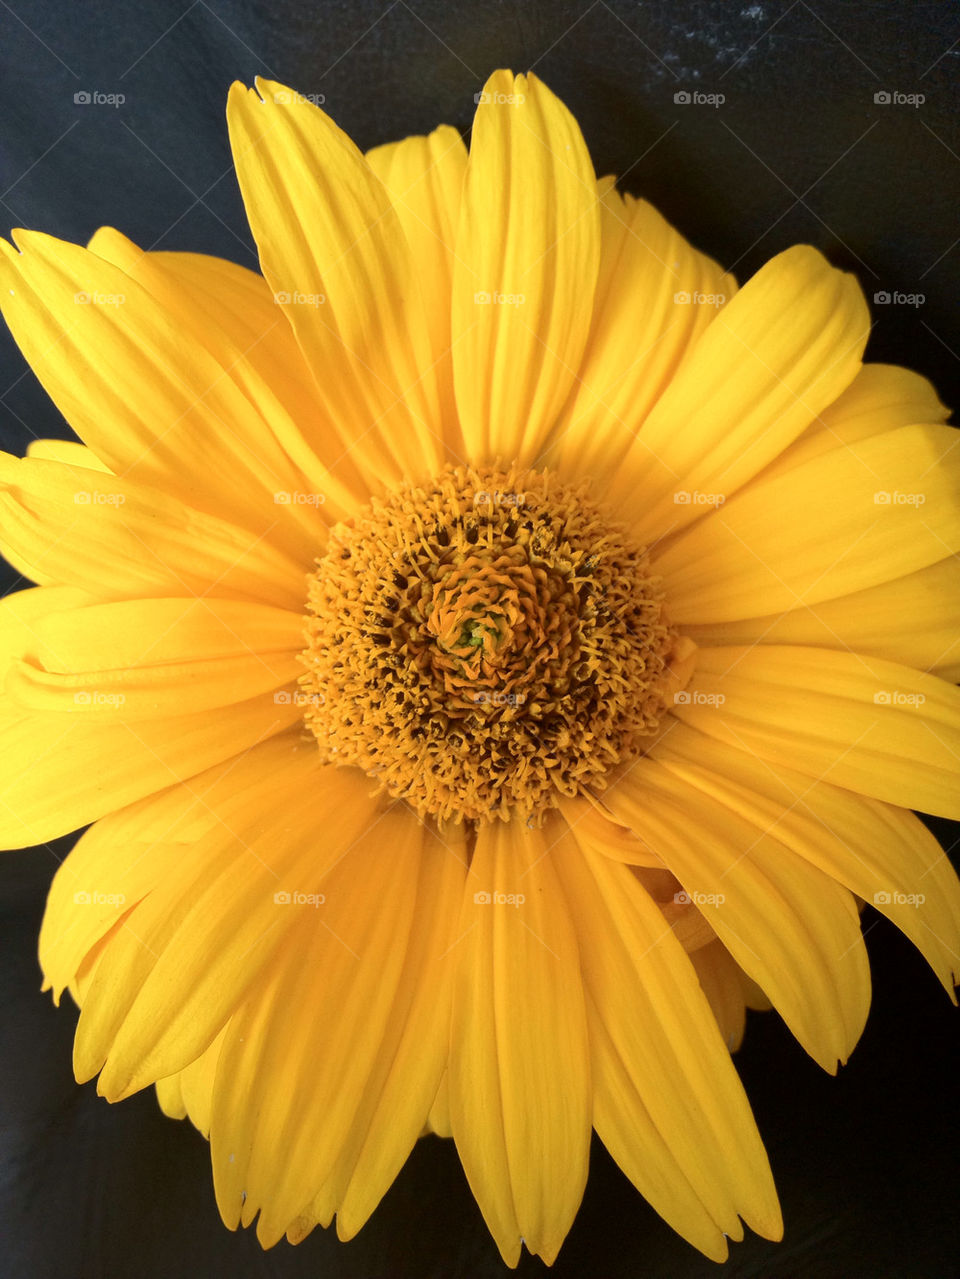 yellow flower united kingdom sun by djethwaa